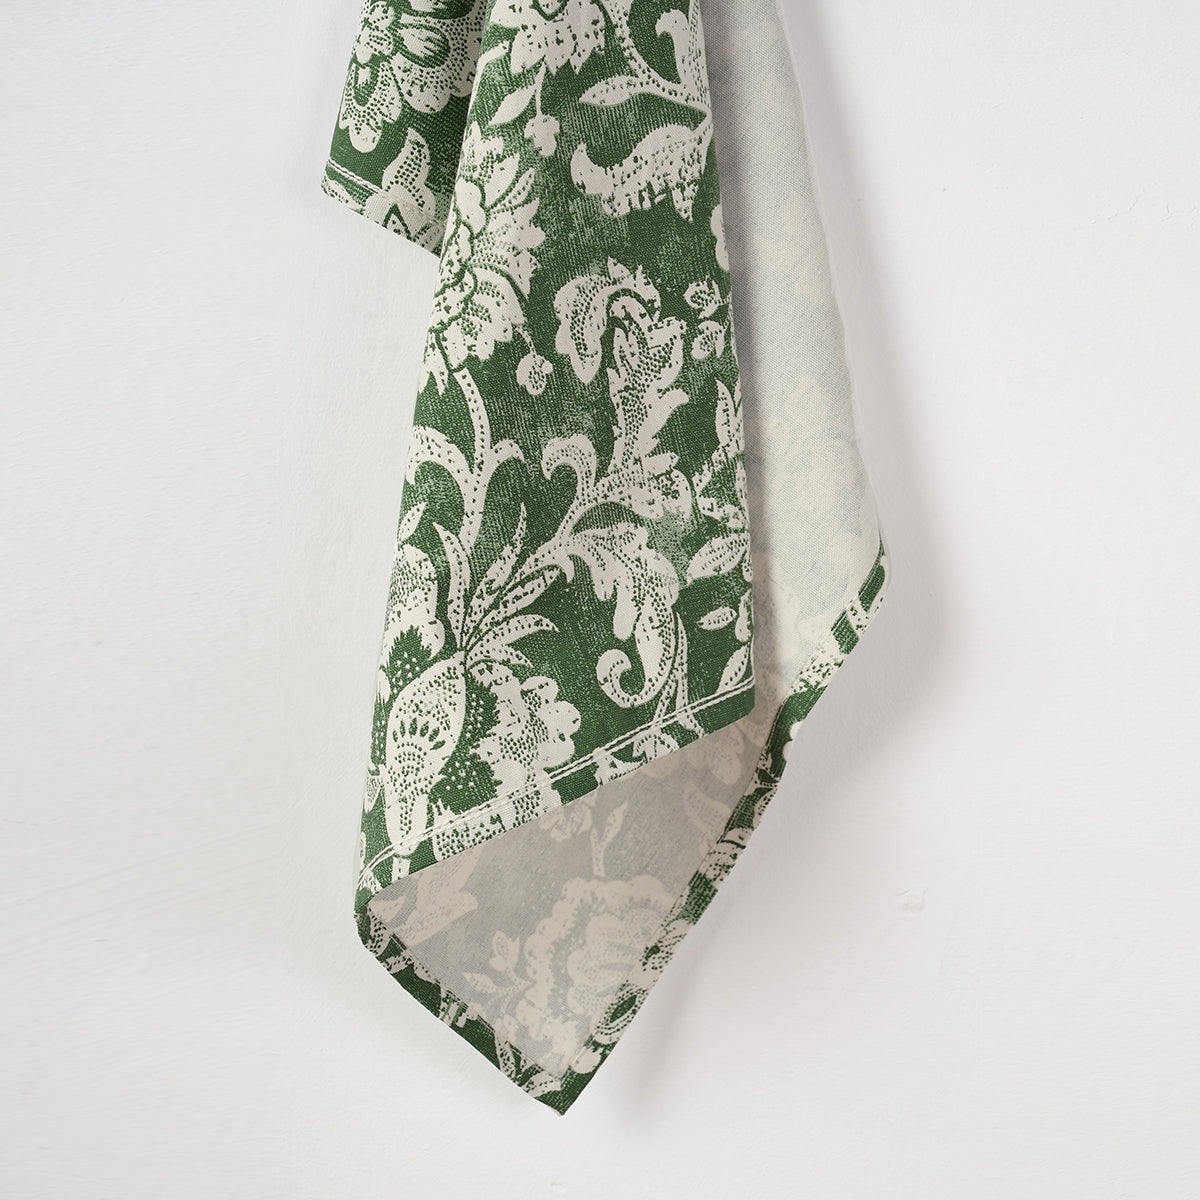 Green Printed Kitchen Towel, bold floral pattern, 100% cotton, size 20"X28"